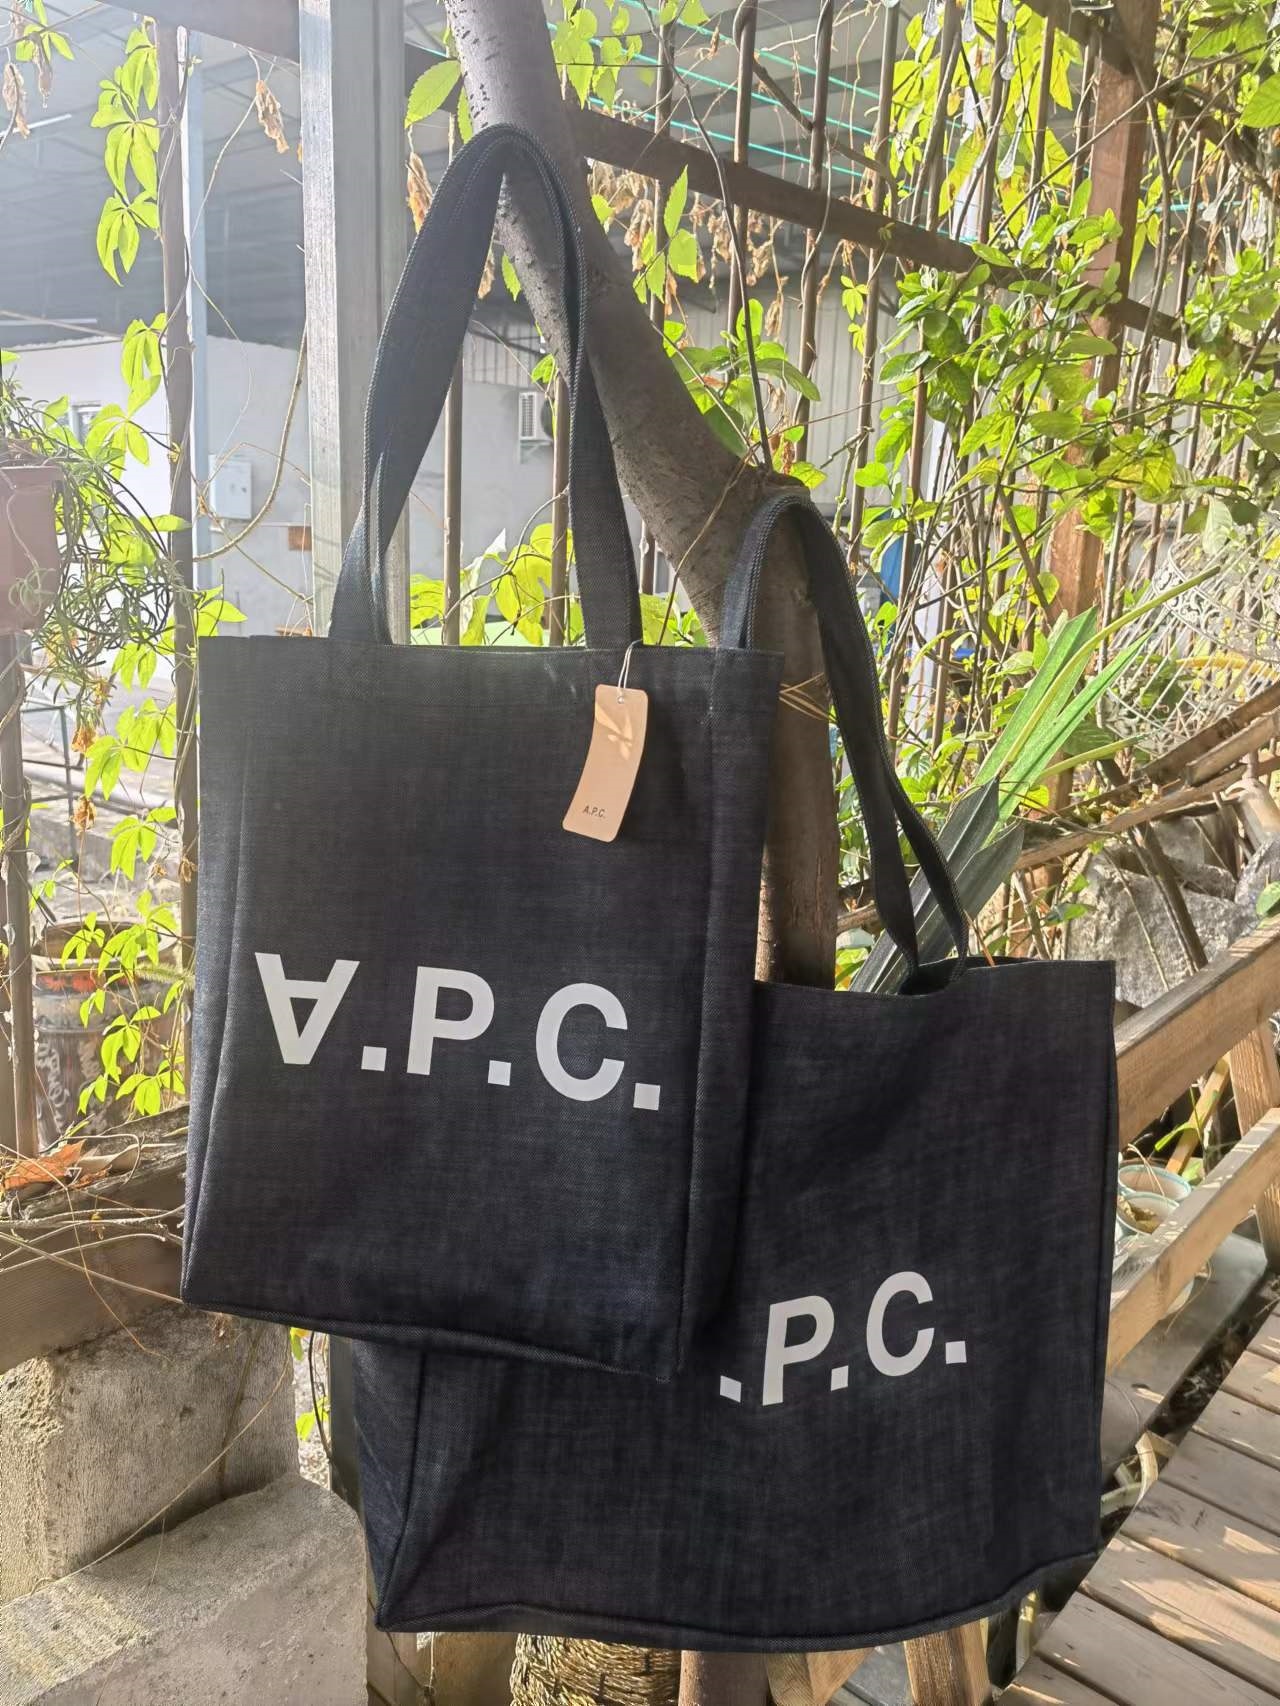 A.P.C. Logo Denim Tote Bag